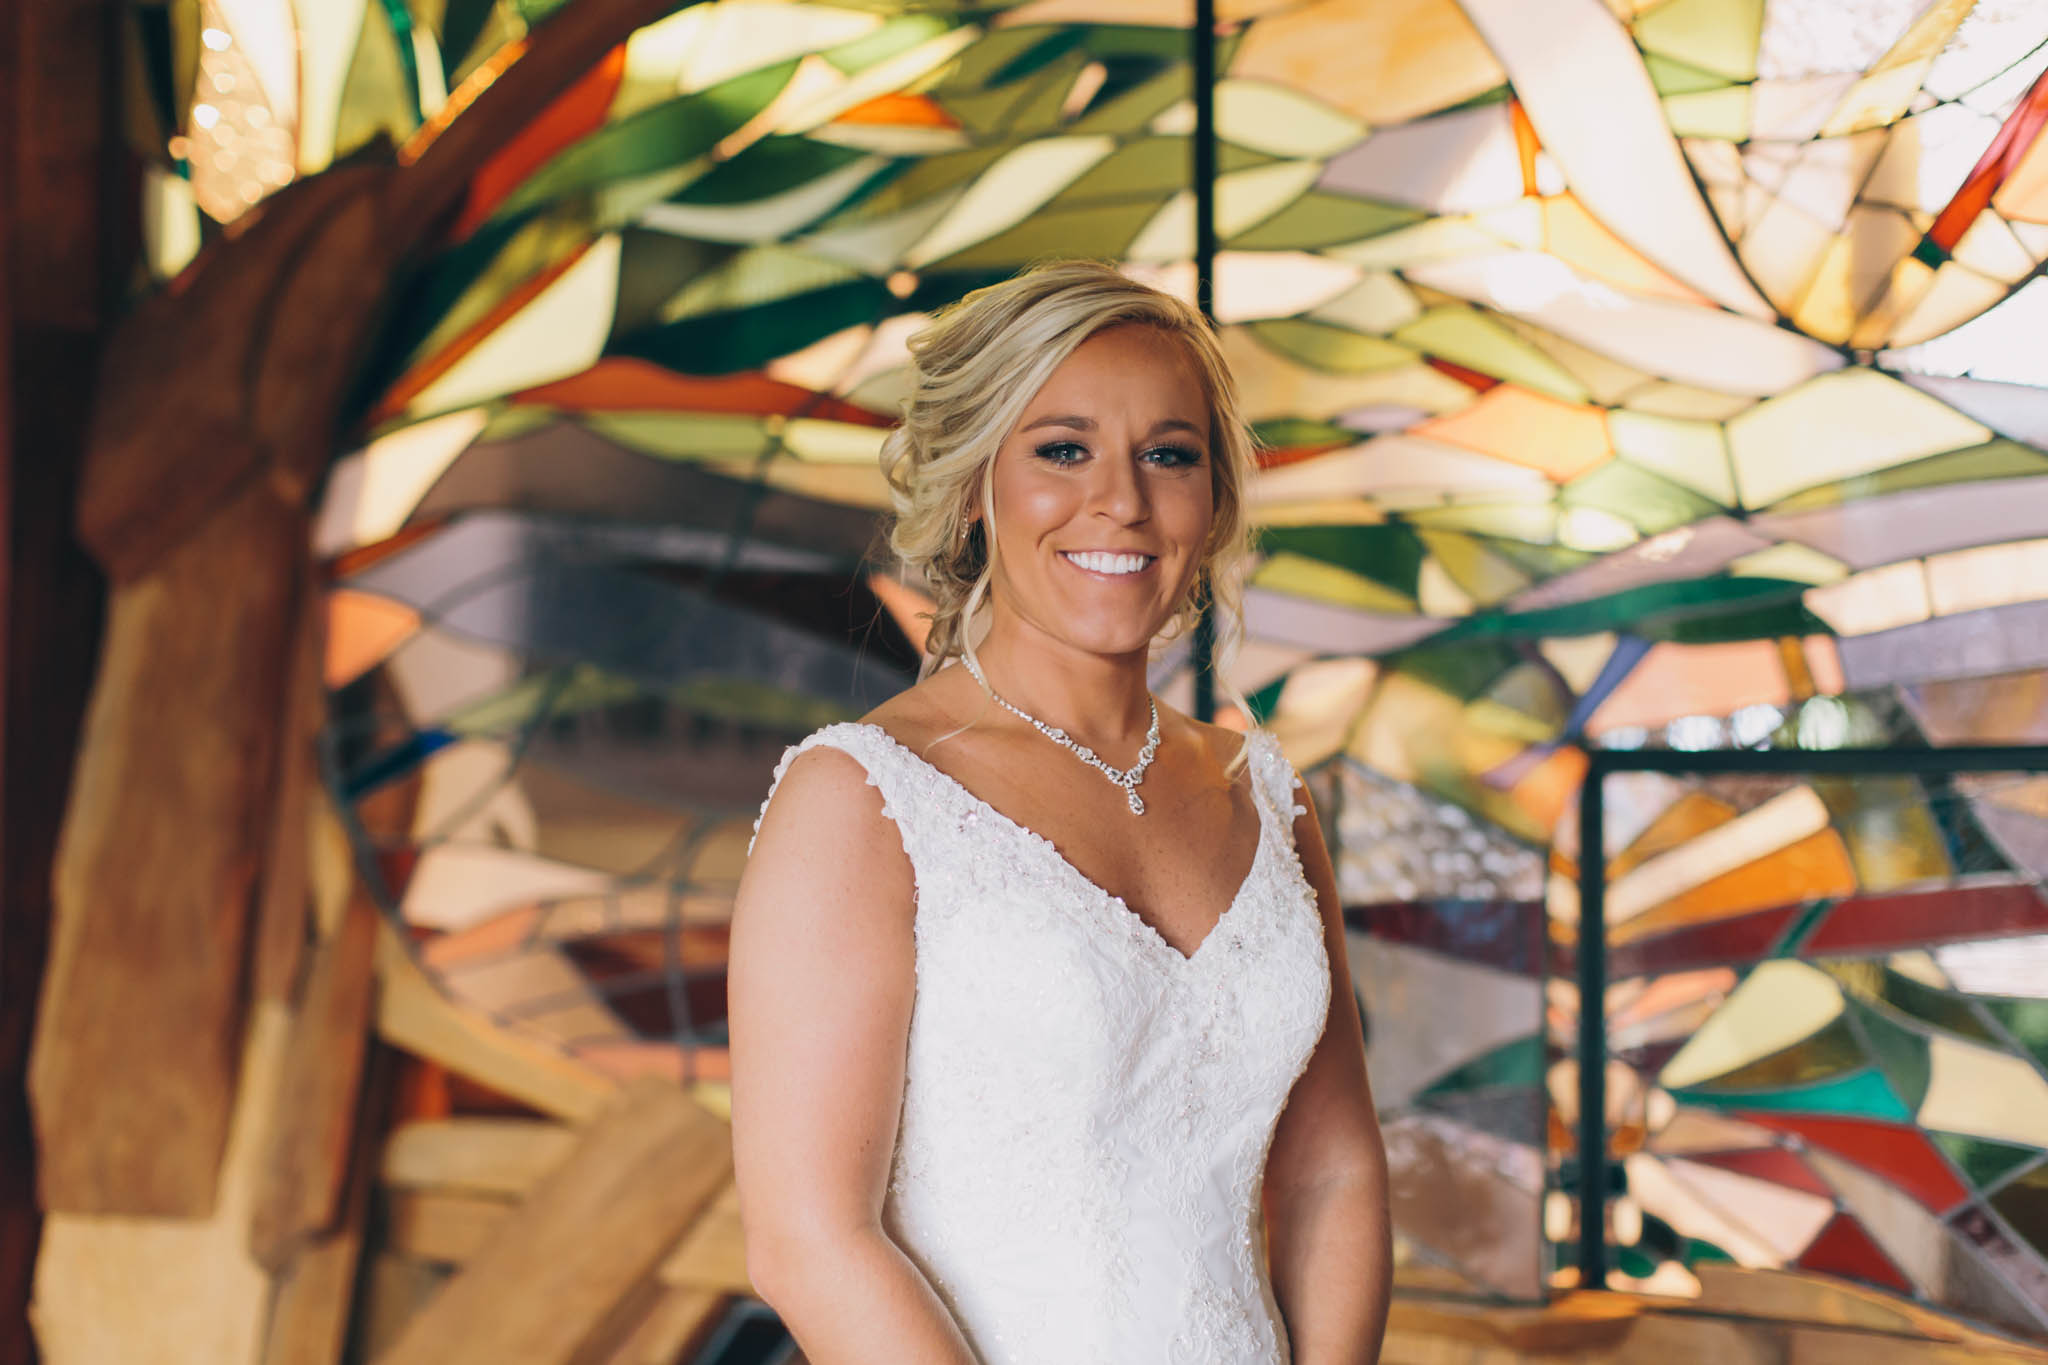 Jillian VanZytveld Photography - Grand Rapids Lifestyle Wedding Photography - 034.jpg